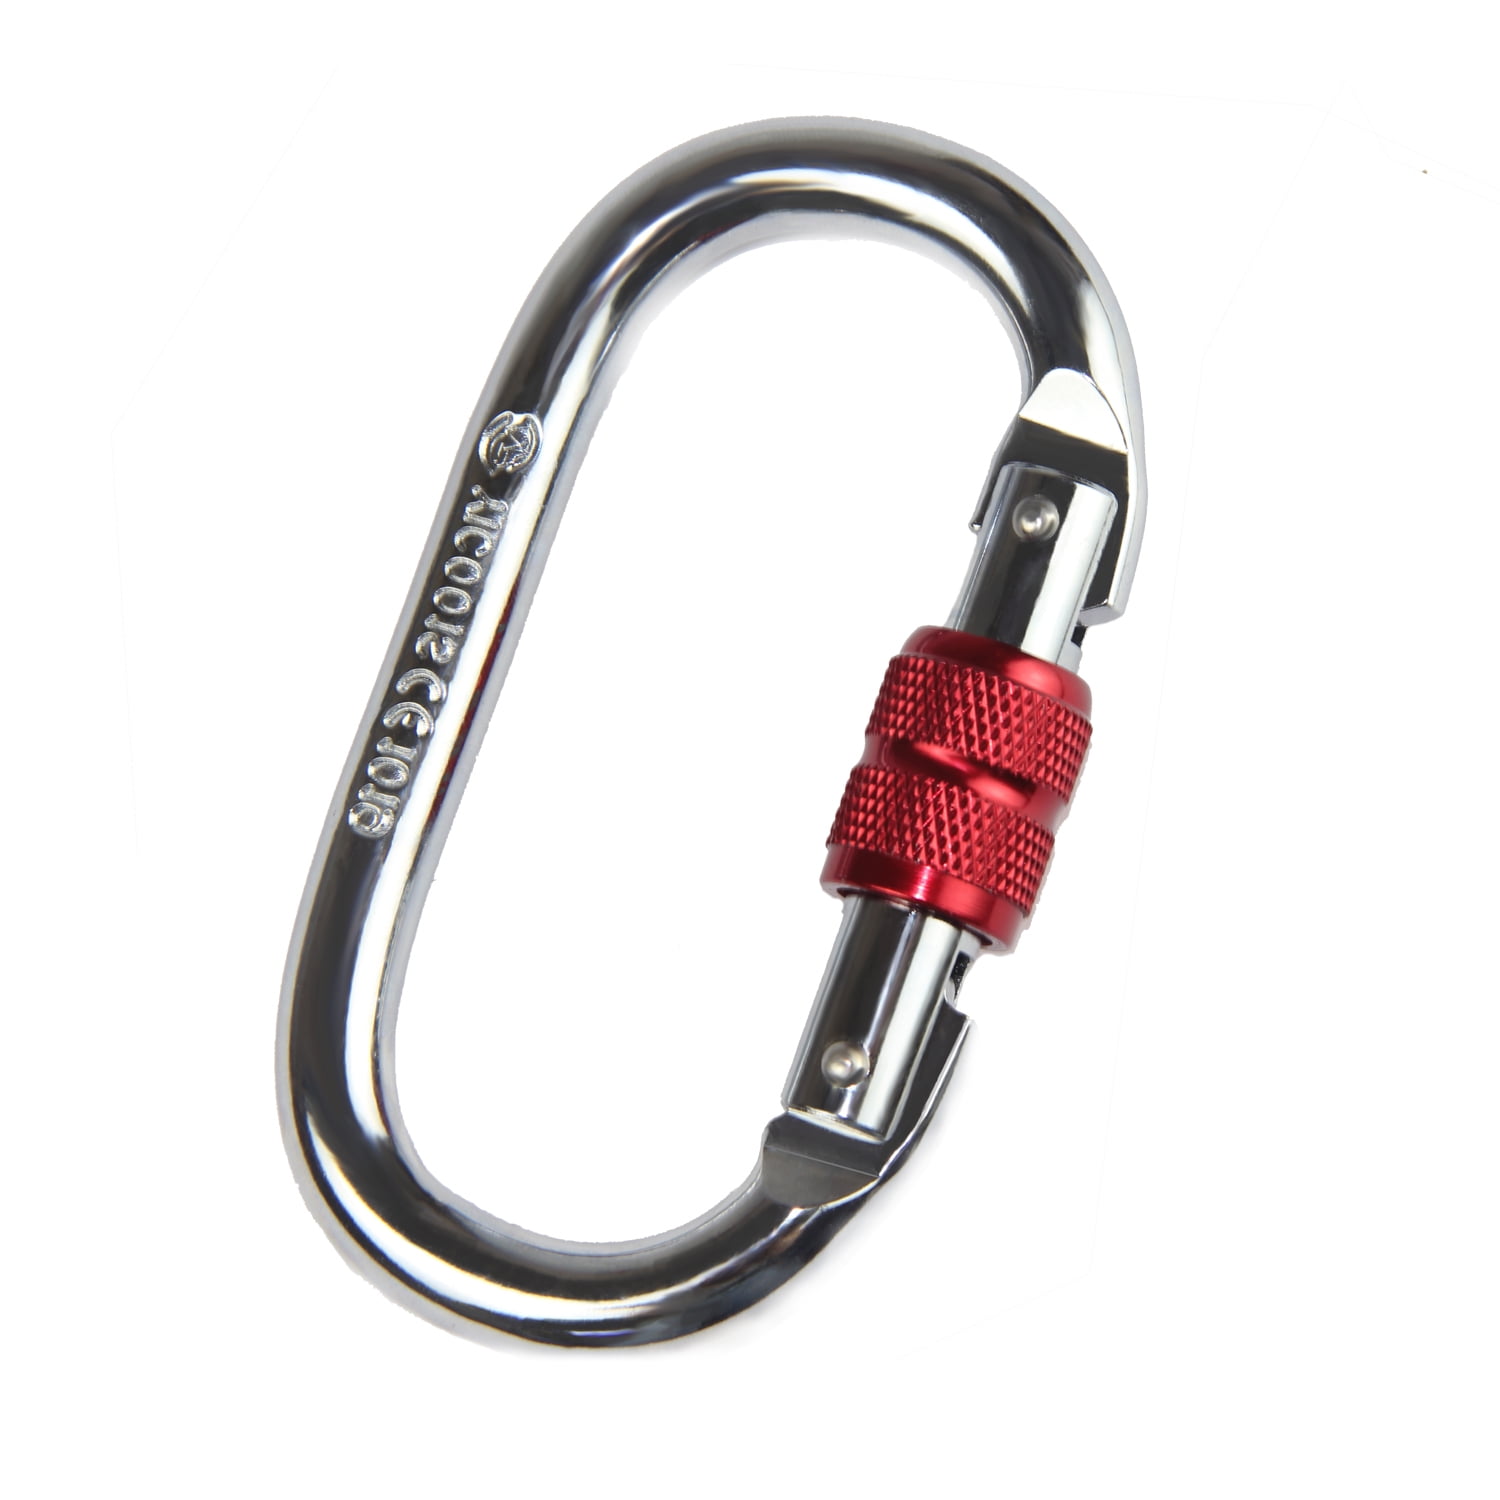 TWO 2 X SCREW LOCK LOCKING CARABINAS CARABINERS Key Ring Chain Lock Karabiner 